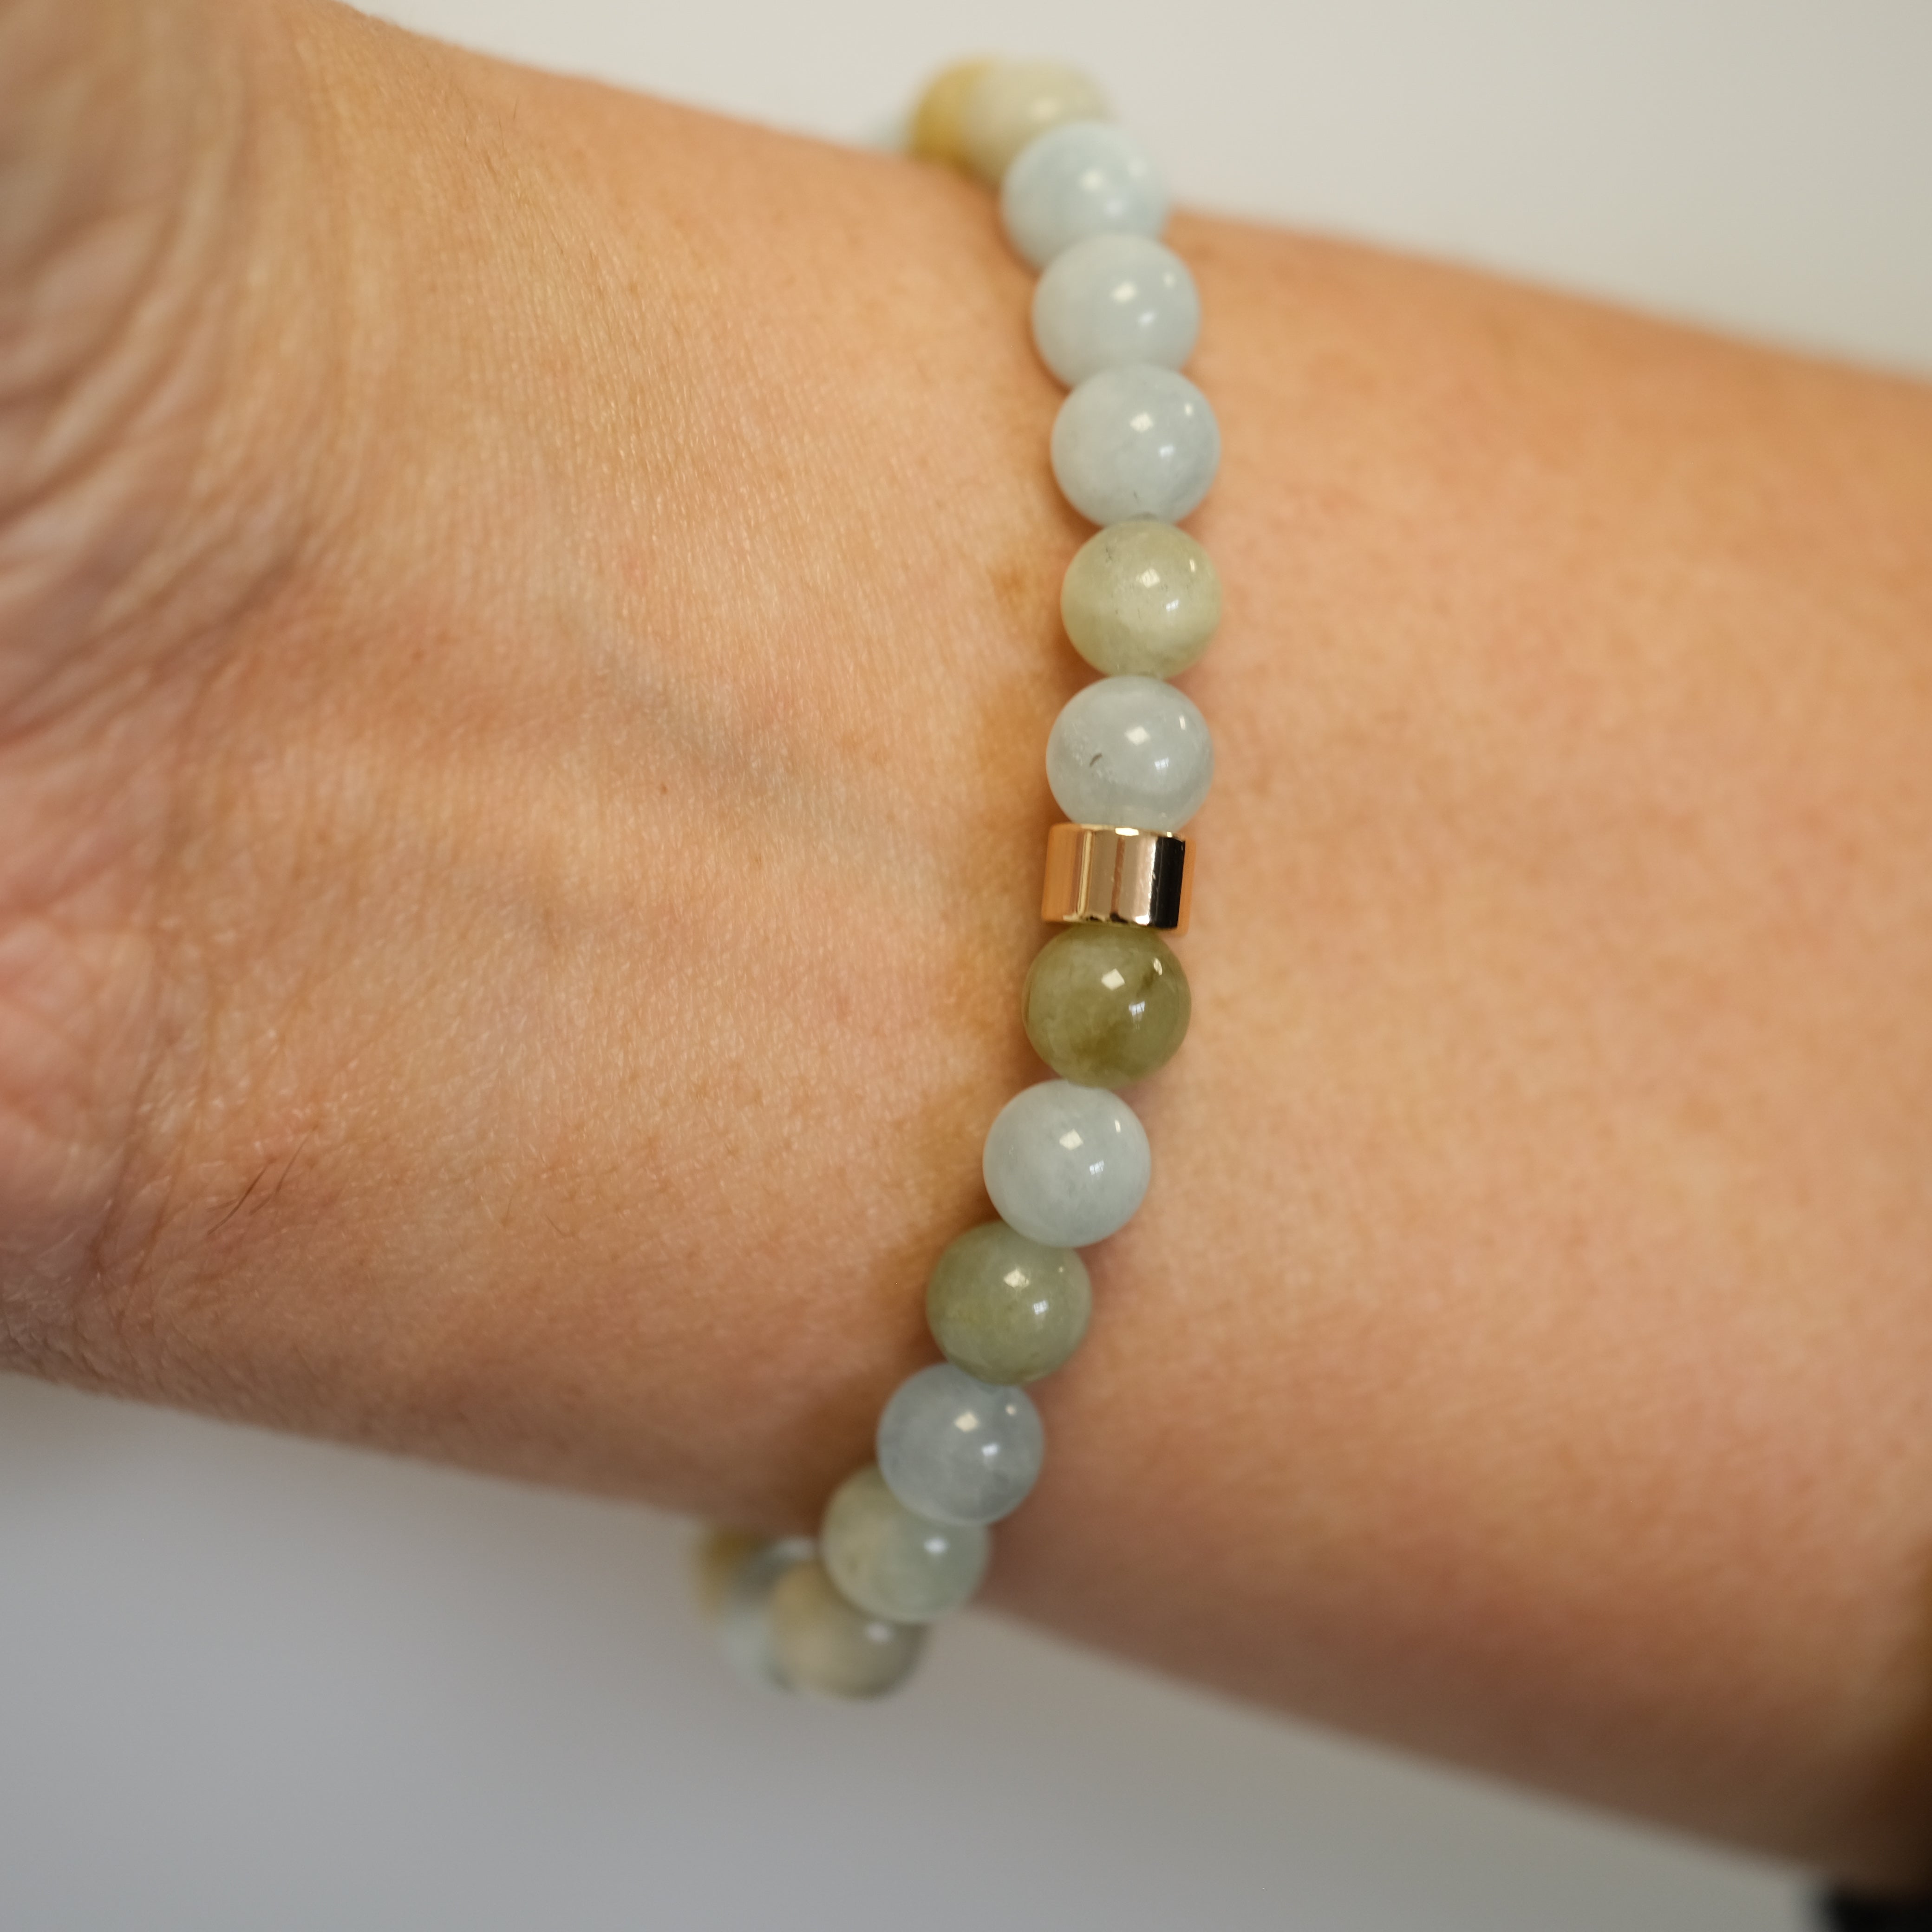 Aquamarine gemstone bracelet in 6mm beads worn on a model's wrist from behind